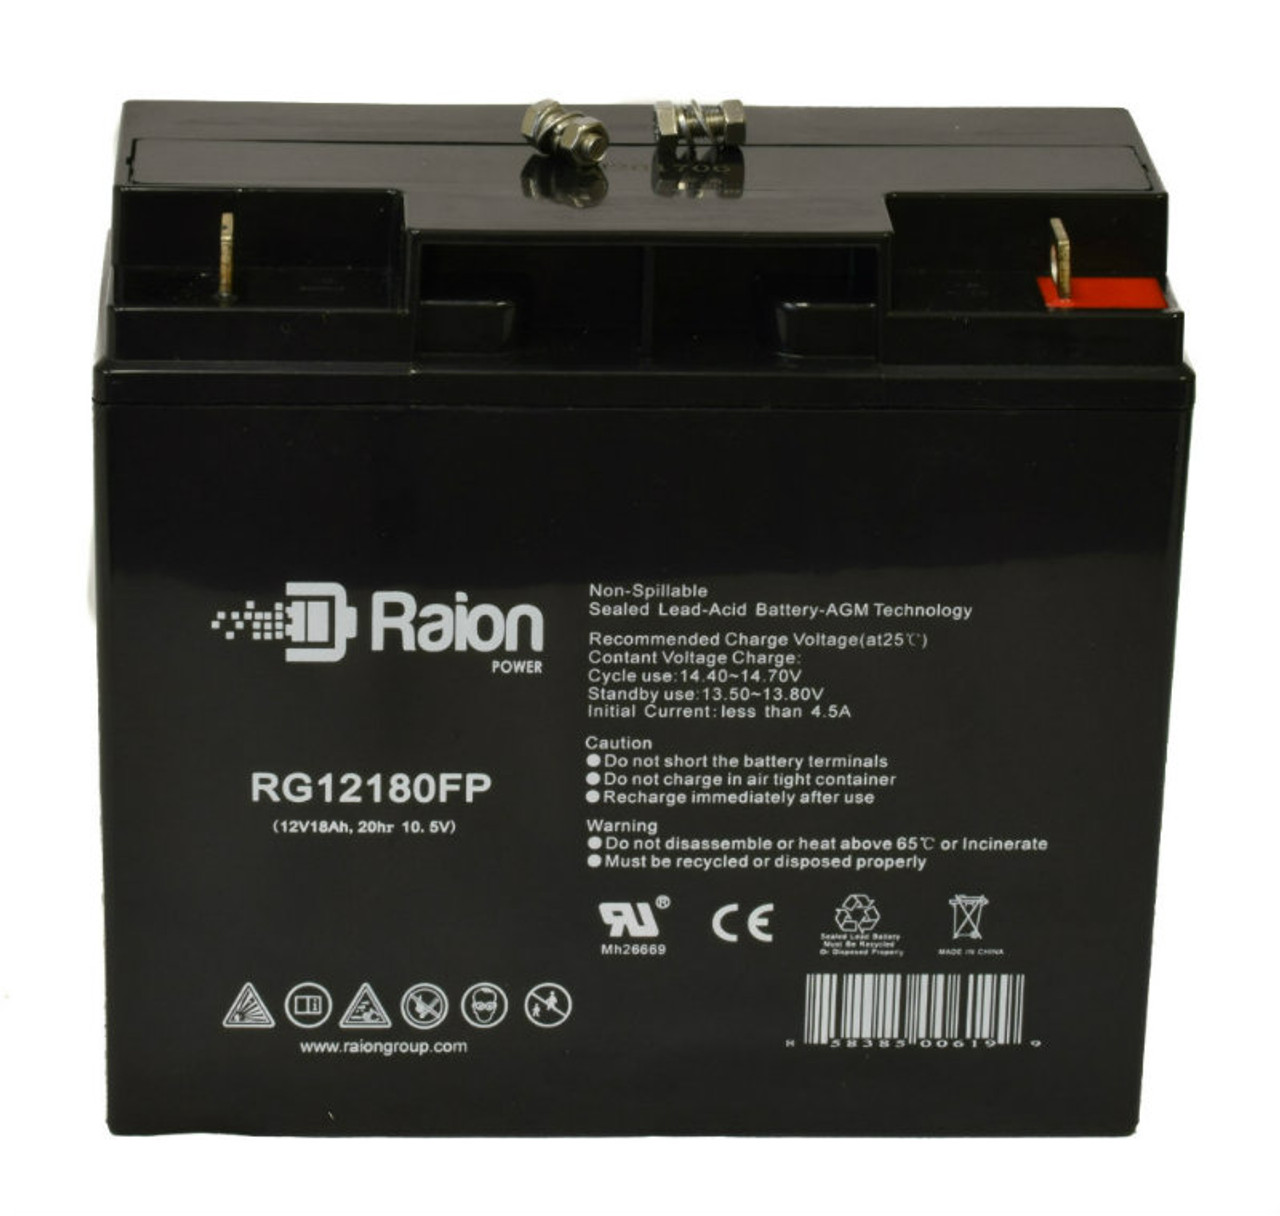 Raion Power RG12180FP 12V 18Ah Lead Acid Battery for GB SB12-18